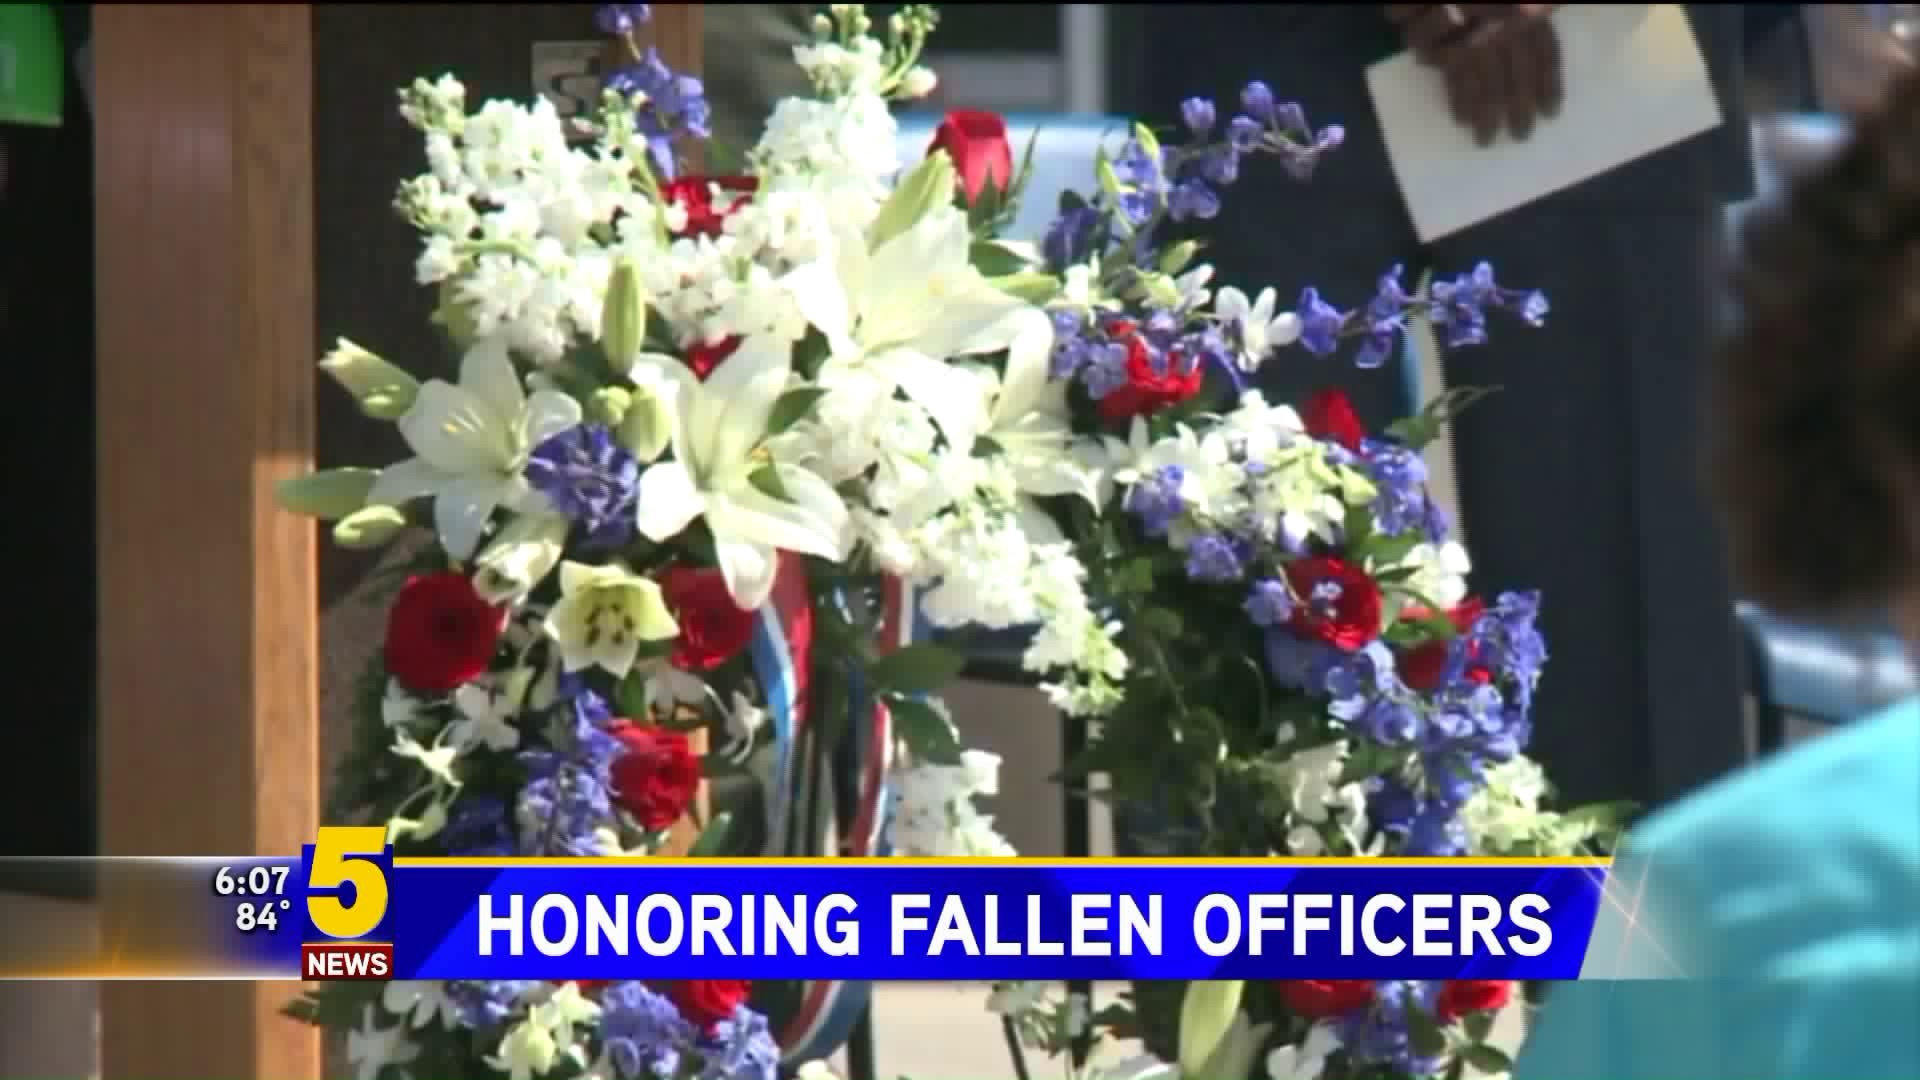 Honoring Fallen Officers